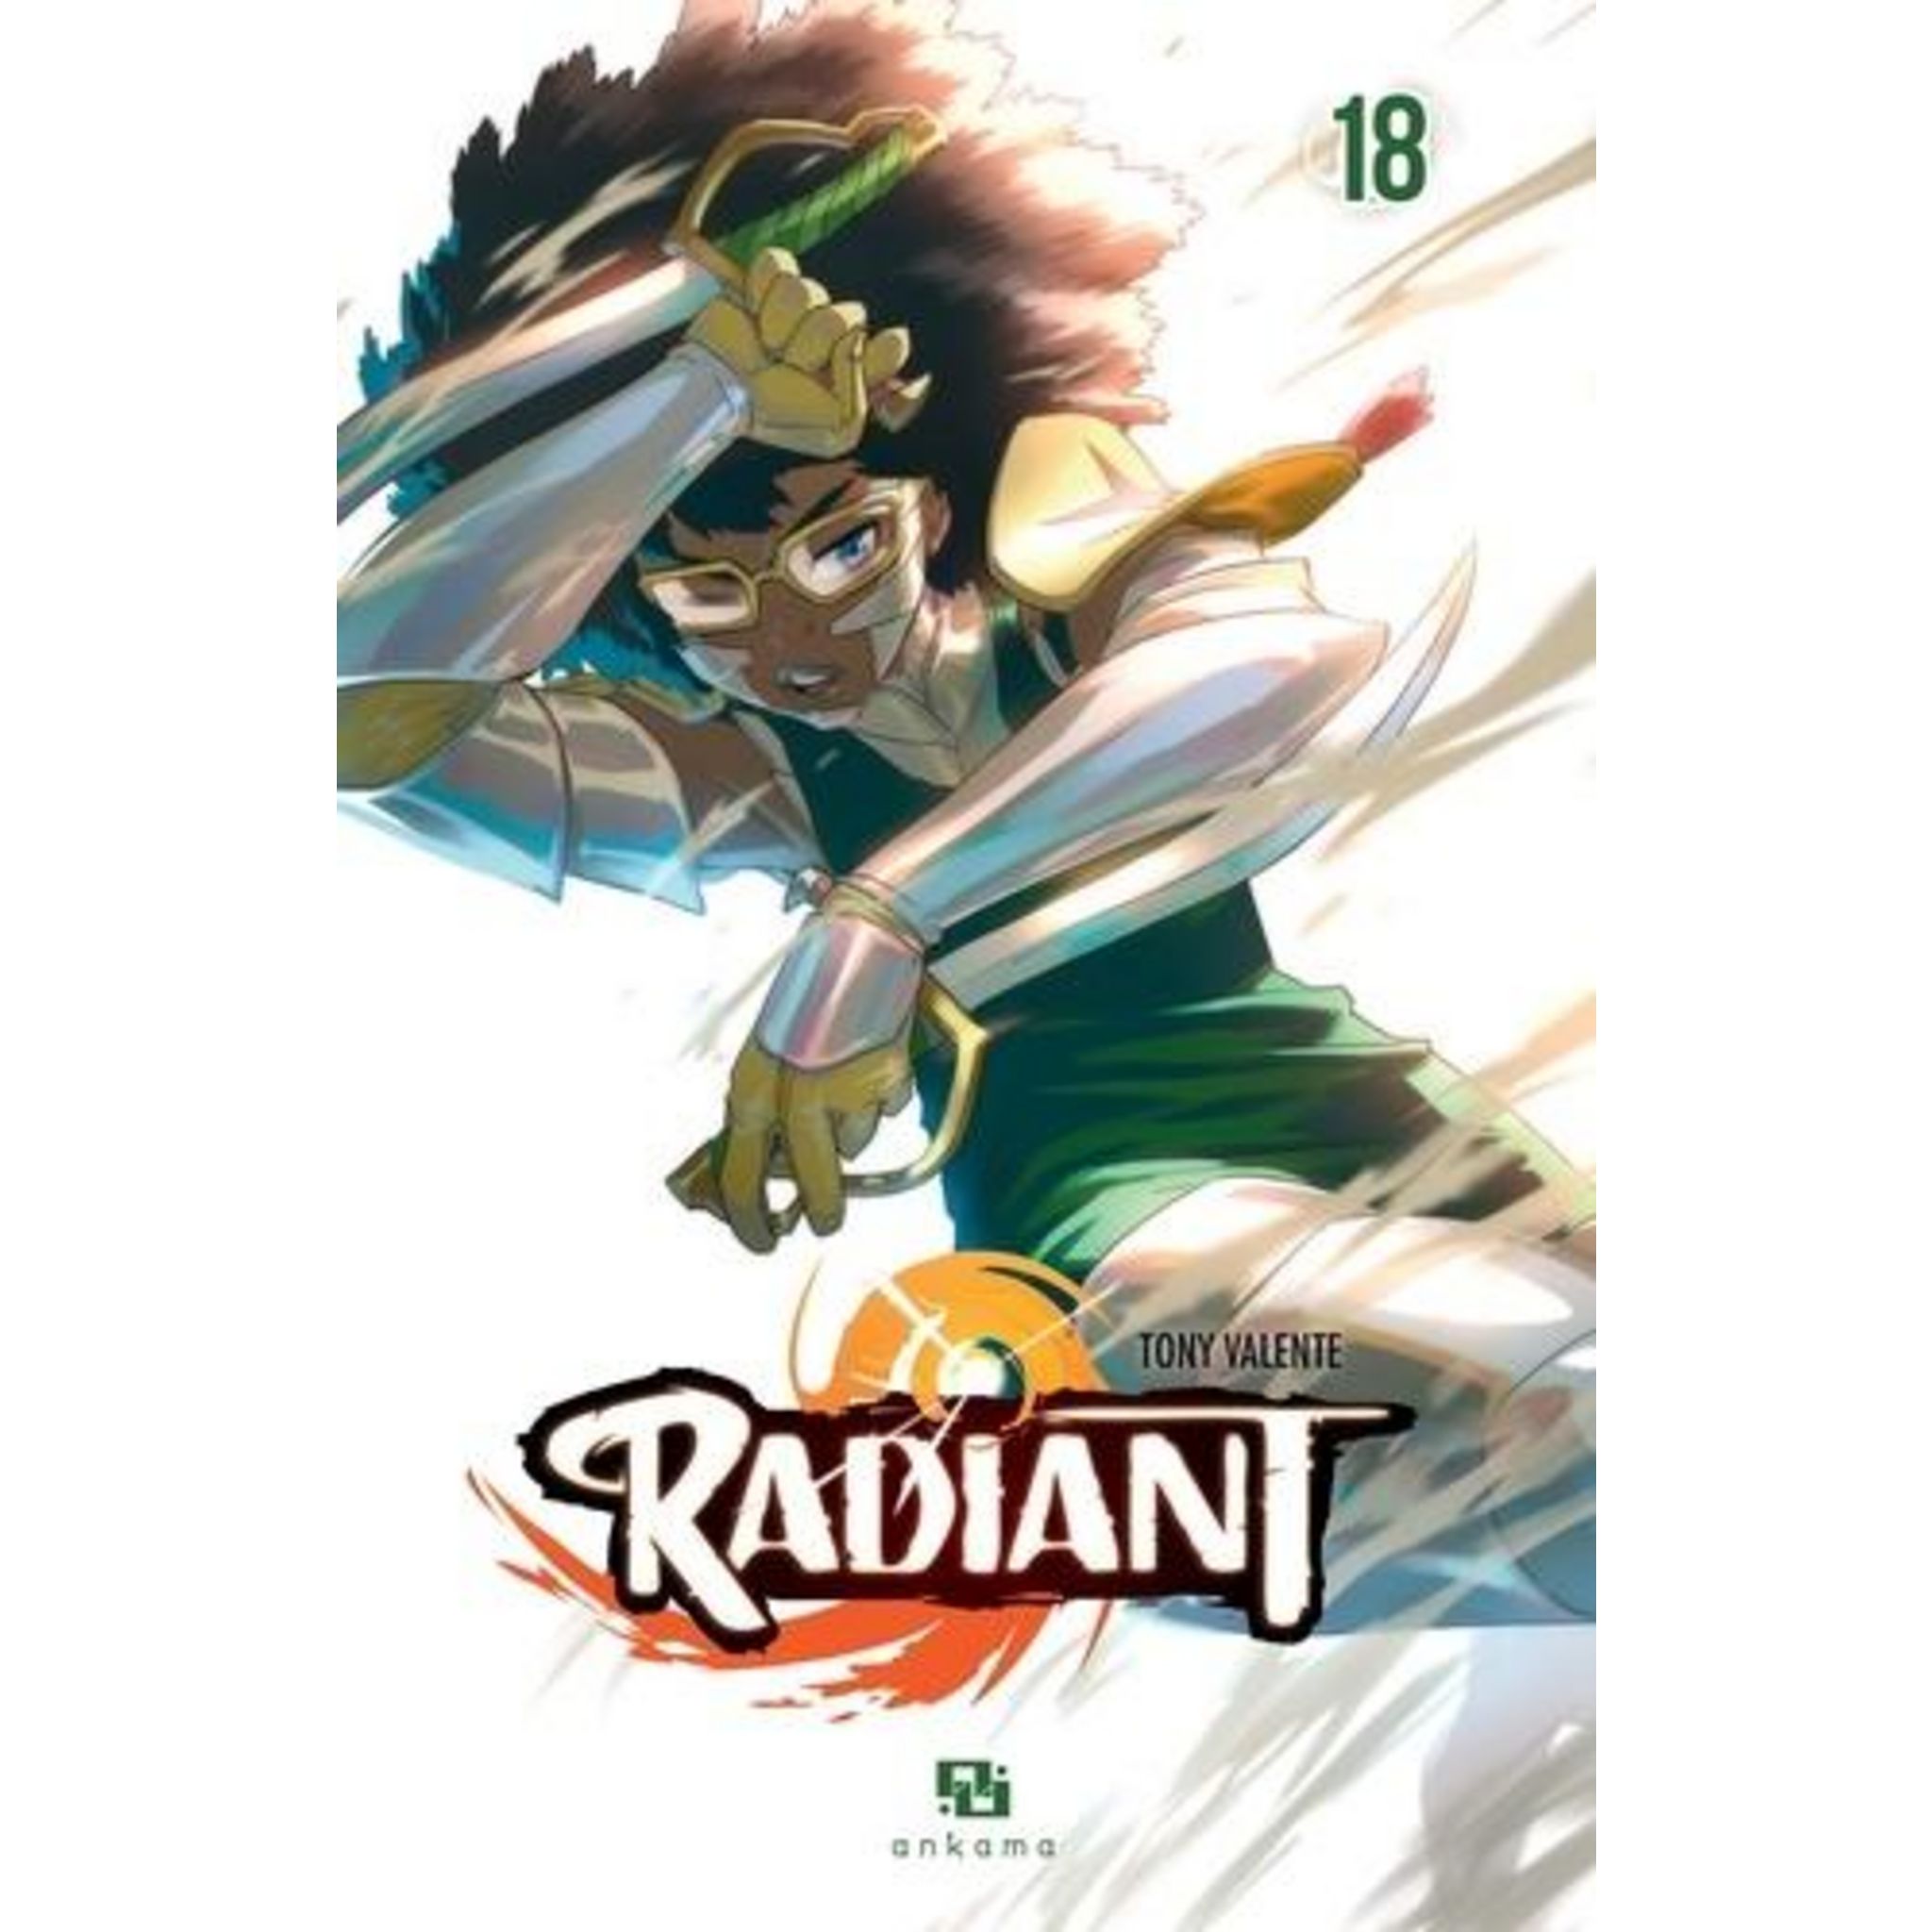 Radiant - Coffret collector 10 ans - Tony Valente - Manga